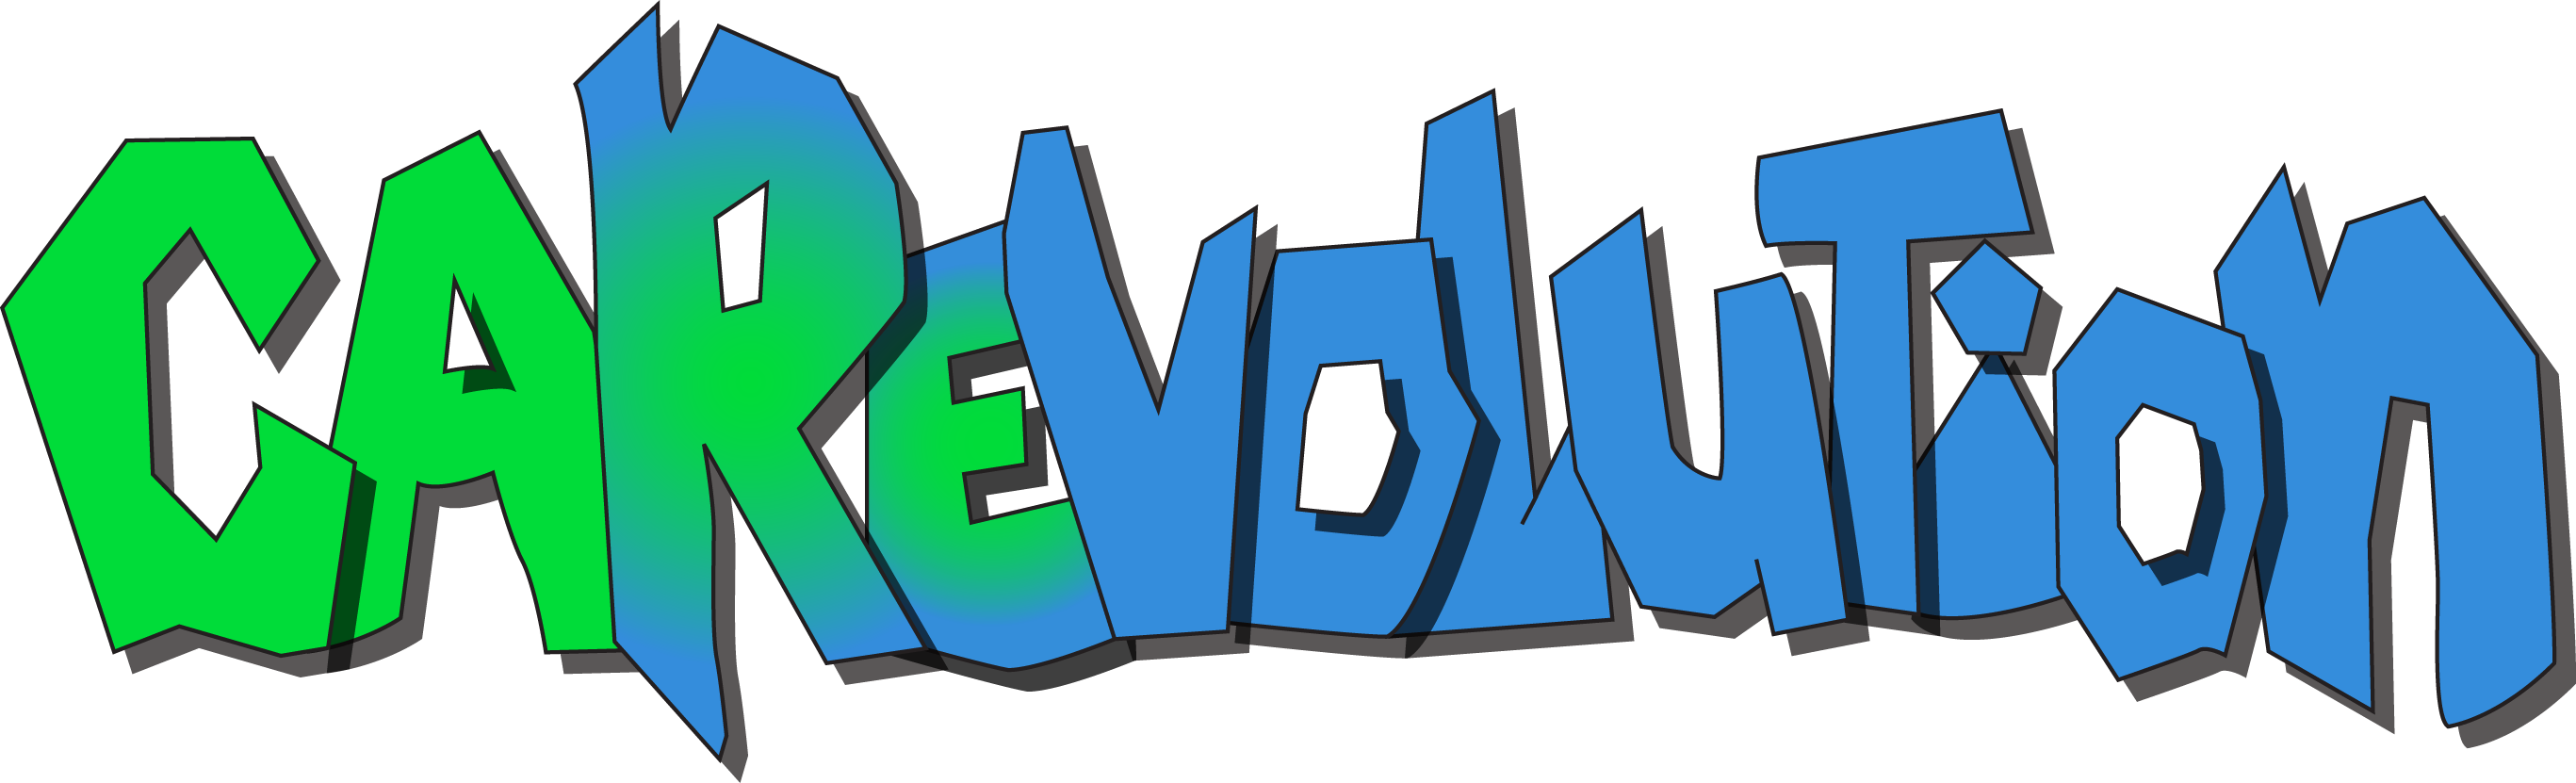 Carevolution Logo - Student Council Party Names (2734x831)